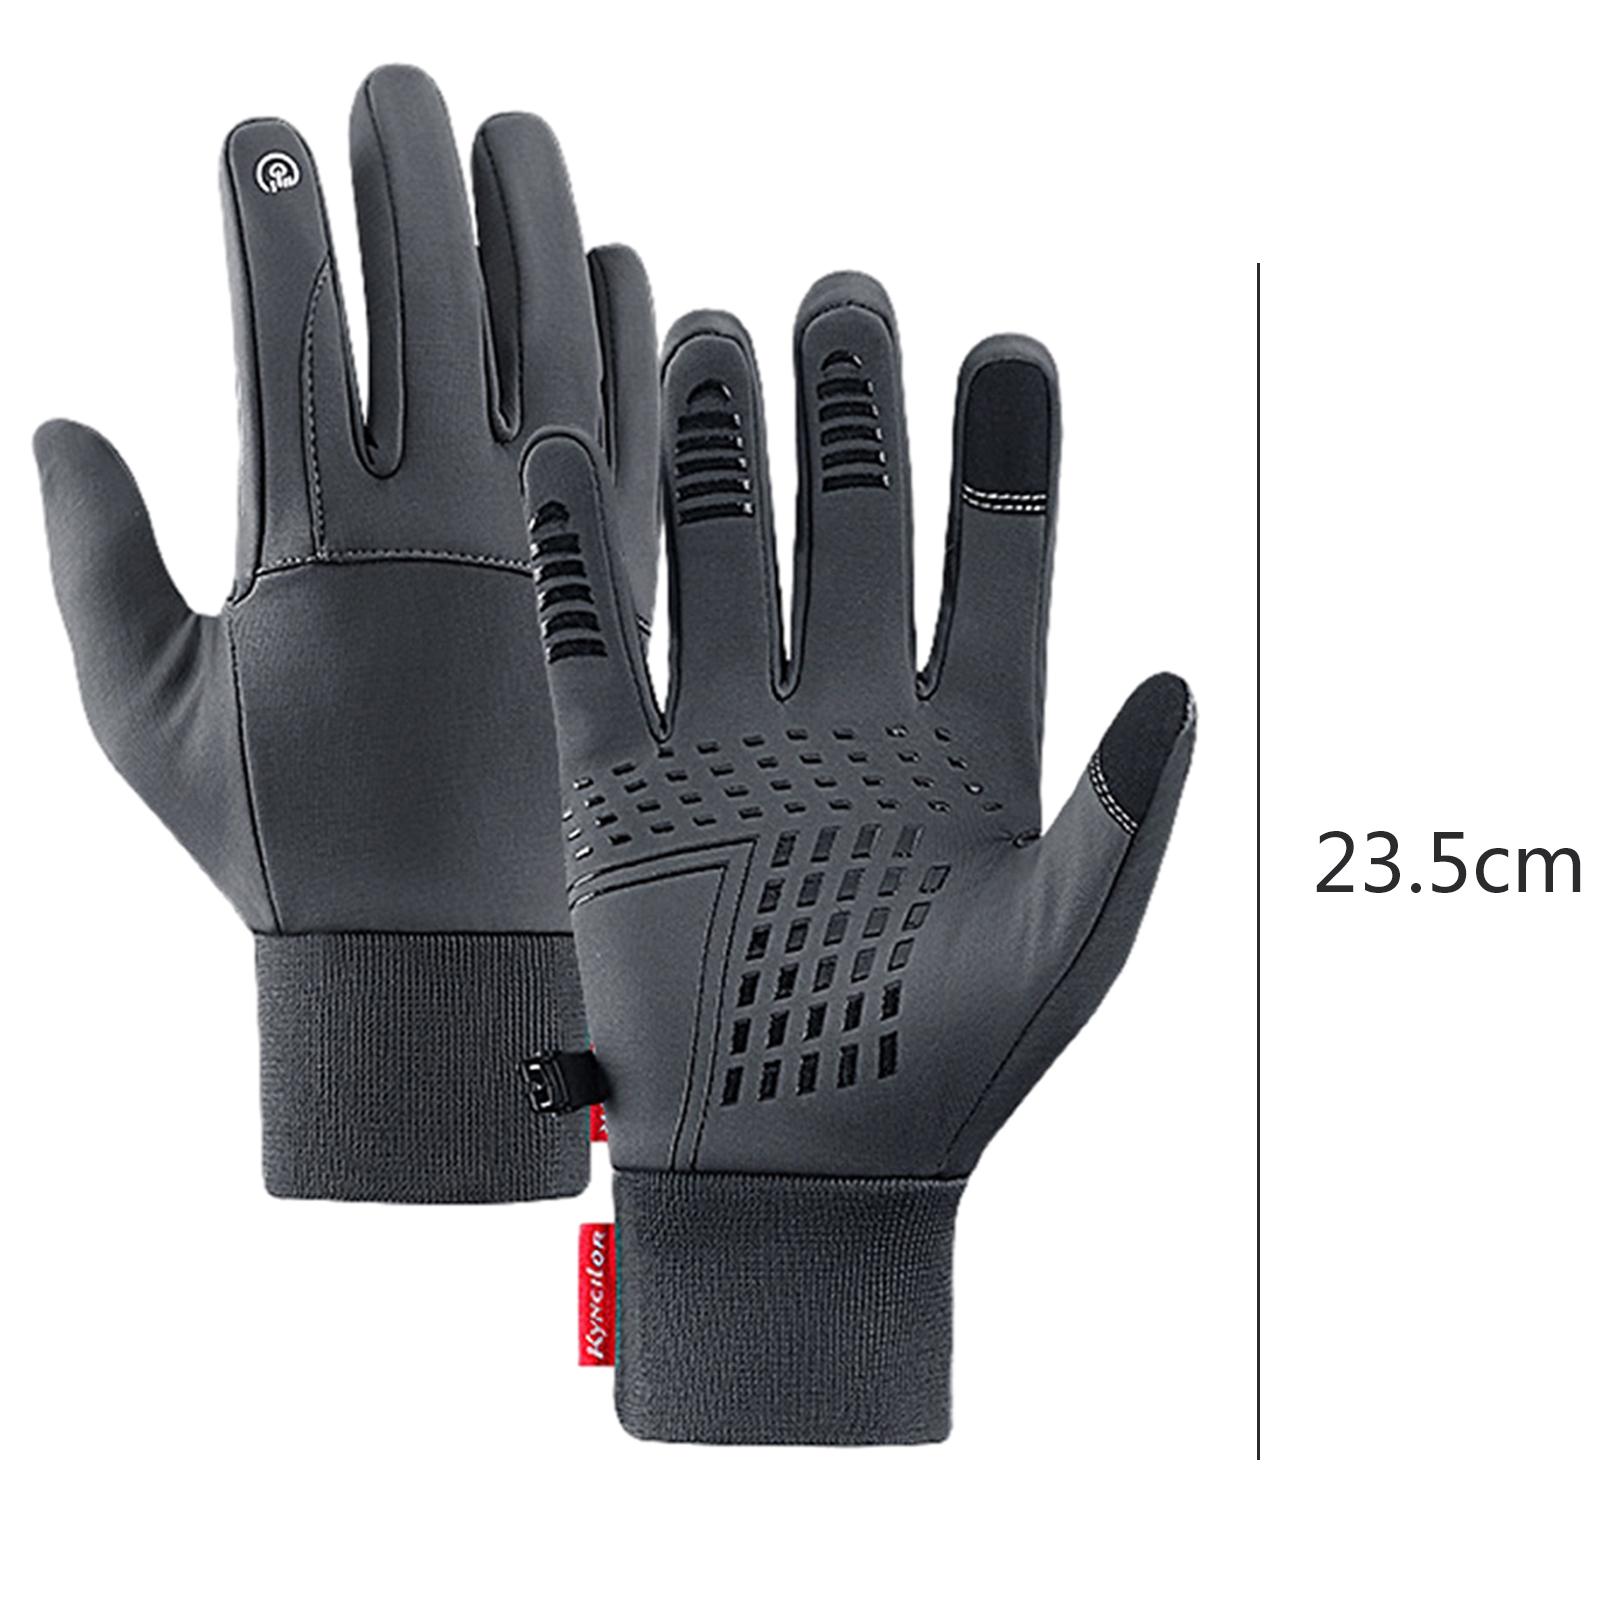 Touchscreen Mittens Cycling Glove Full Finger Warm Gloves for Women M Black